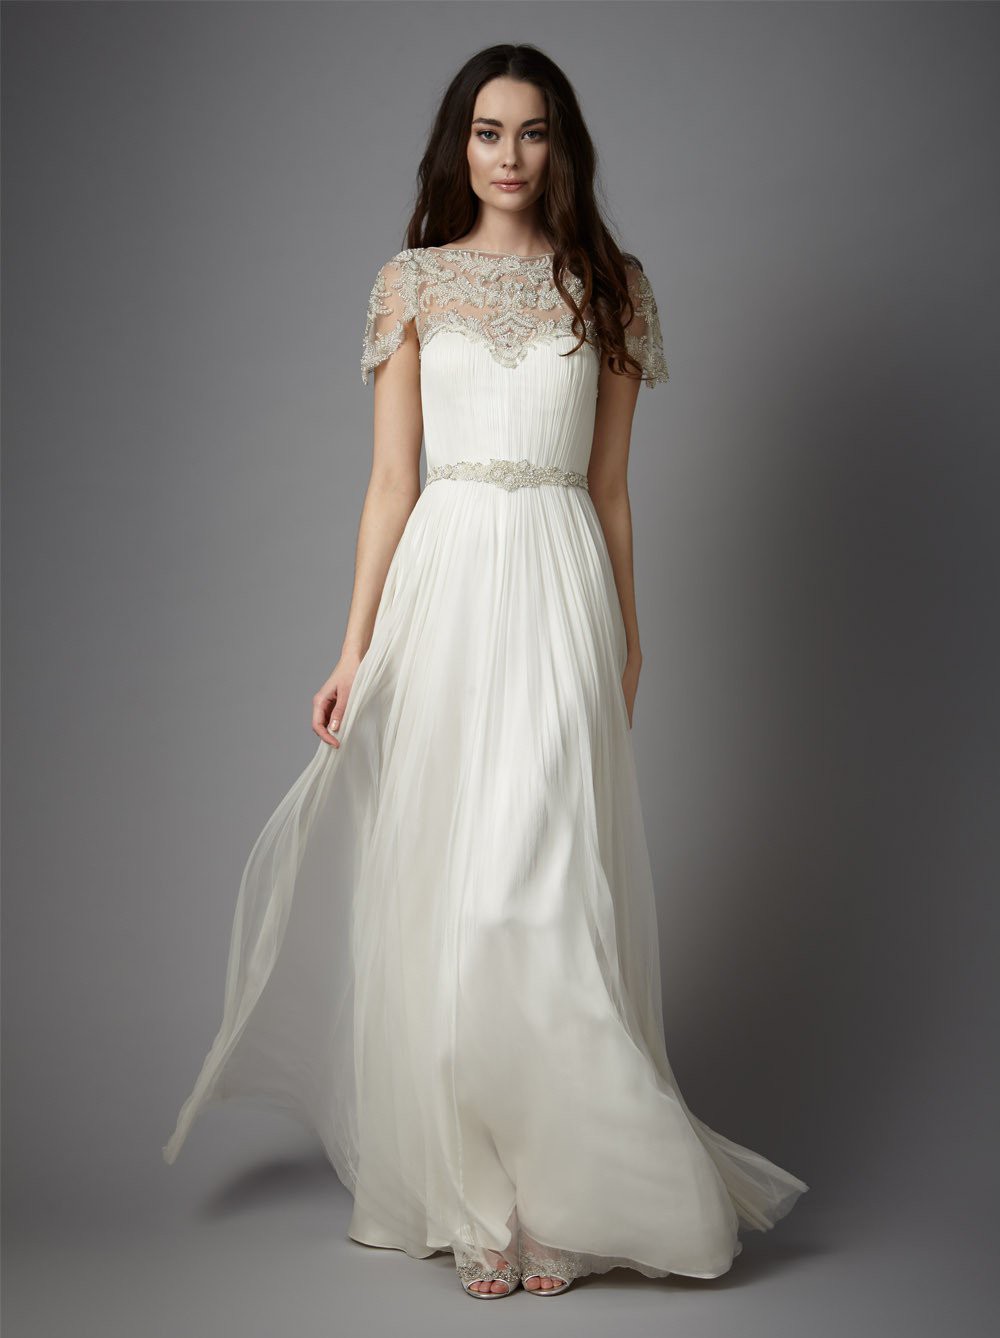 Catherine Deane Anya New Wedding Dress Save 60% - Stillwhite